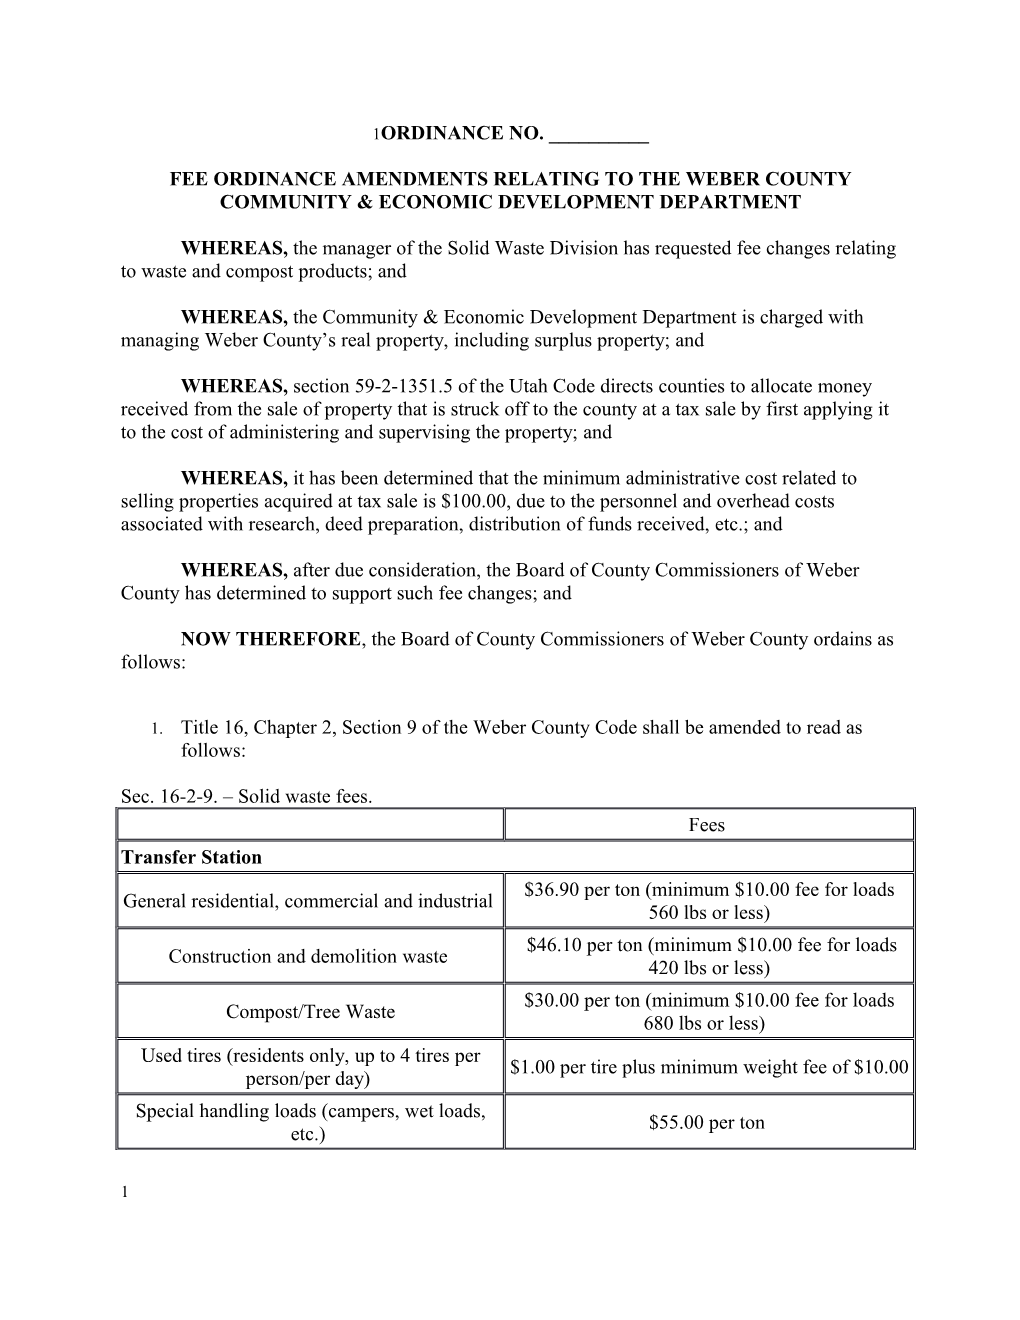 Fee Ordinance Amendments Relating to the Weber County Community & Economic Development